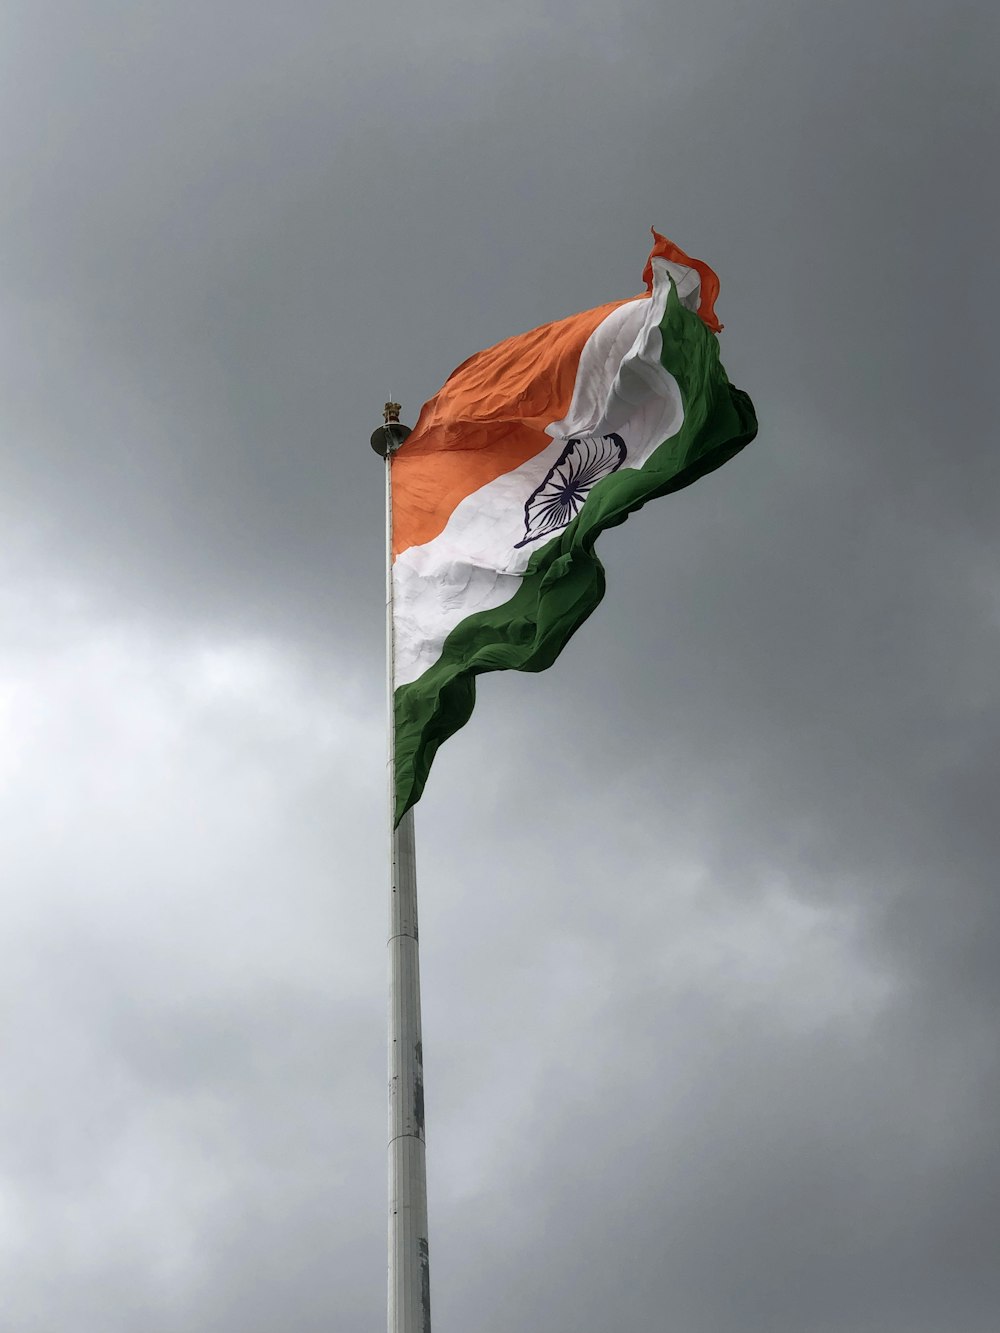 350 Indian Flag Pictures Download Free Images On Unsplash